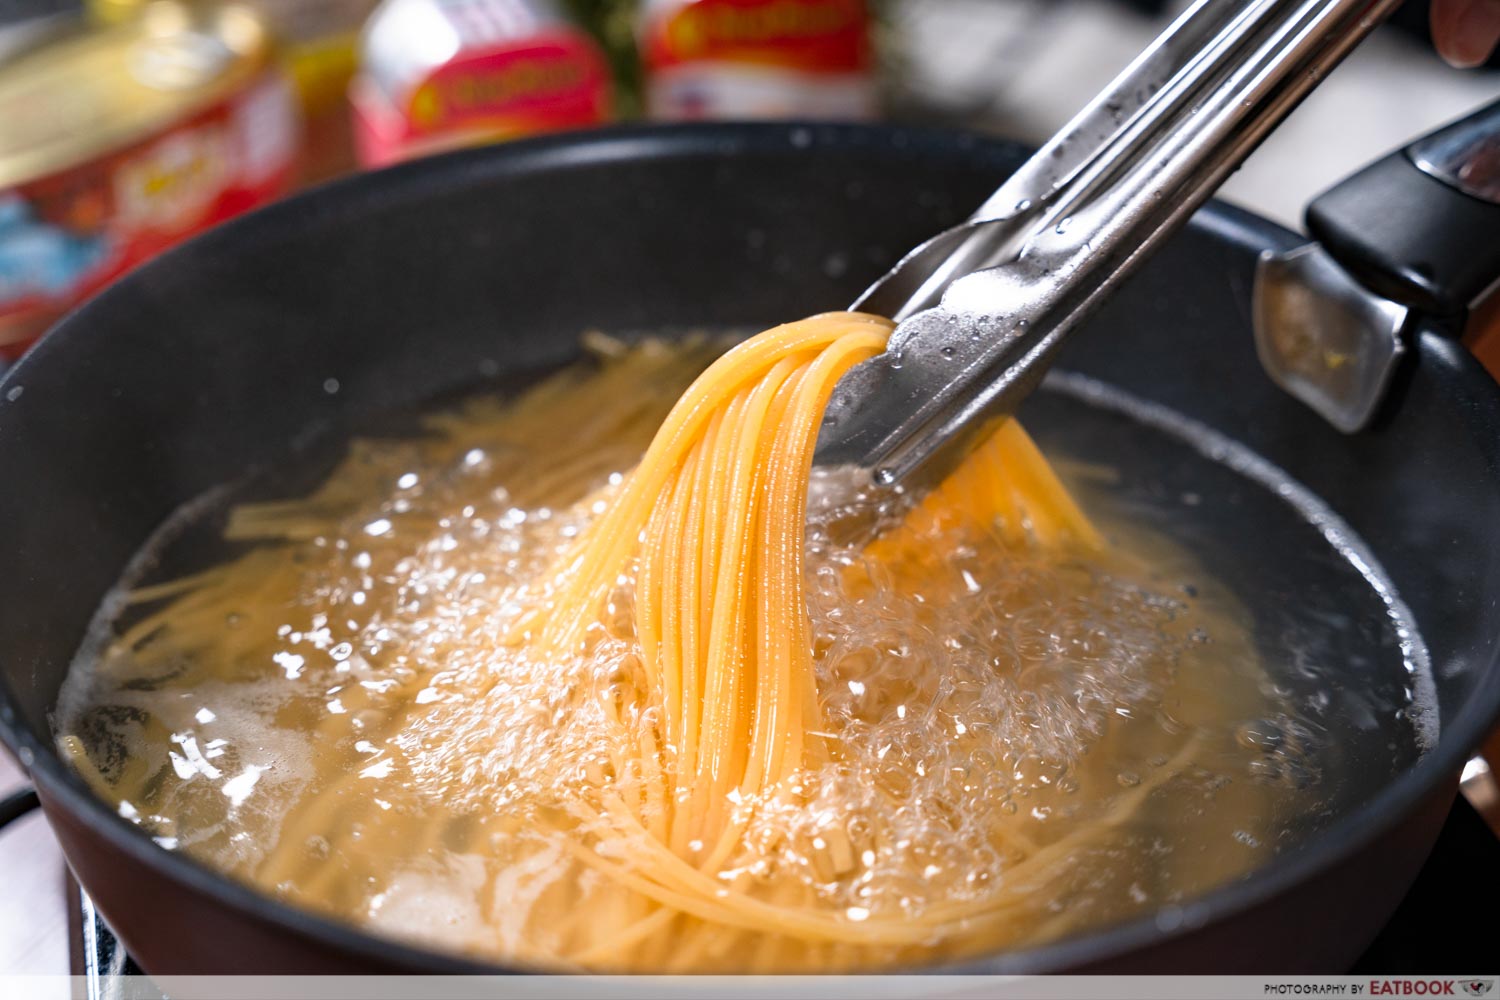 Canned food recipes - boiling spaghetti